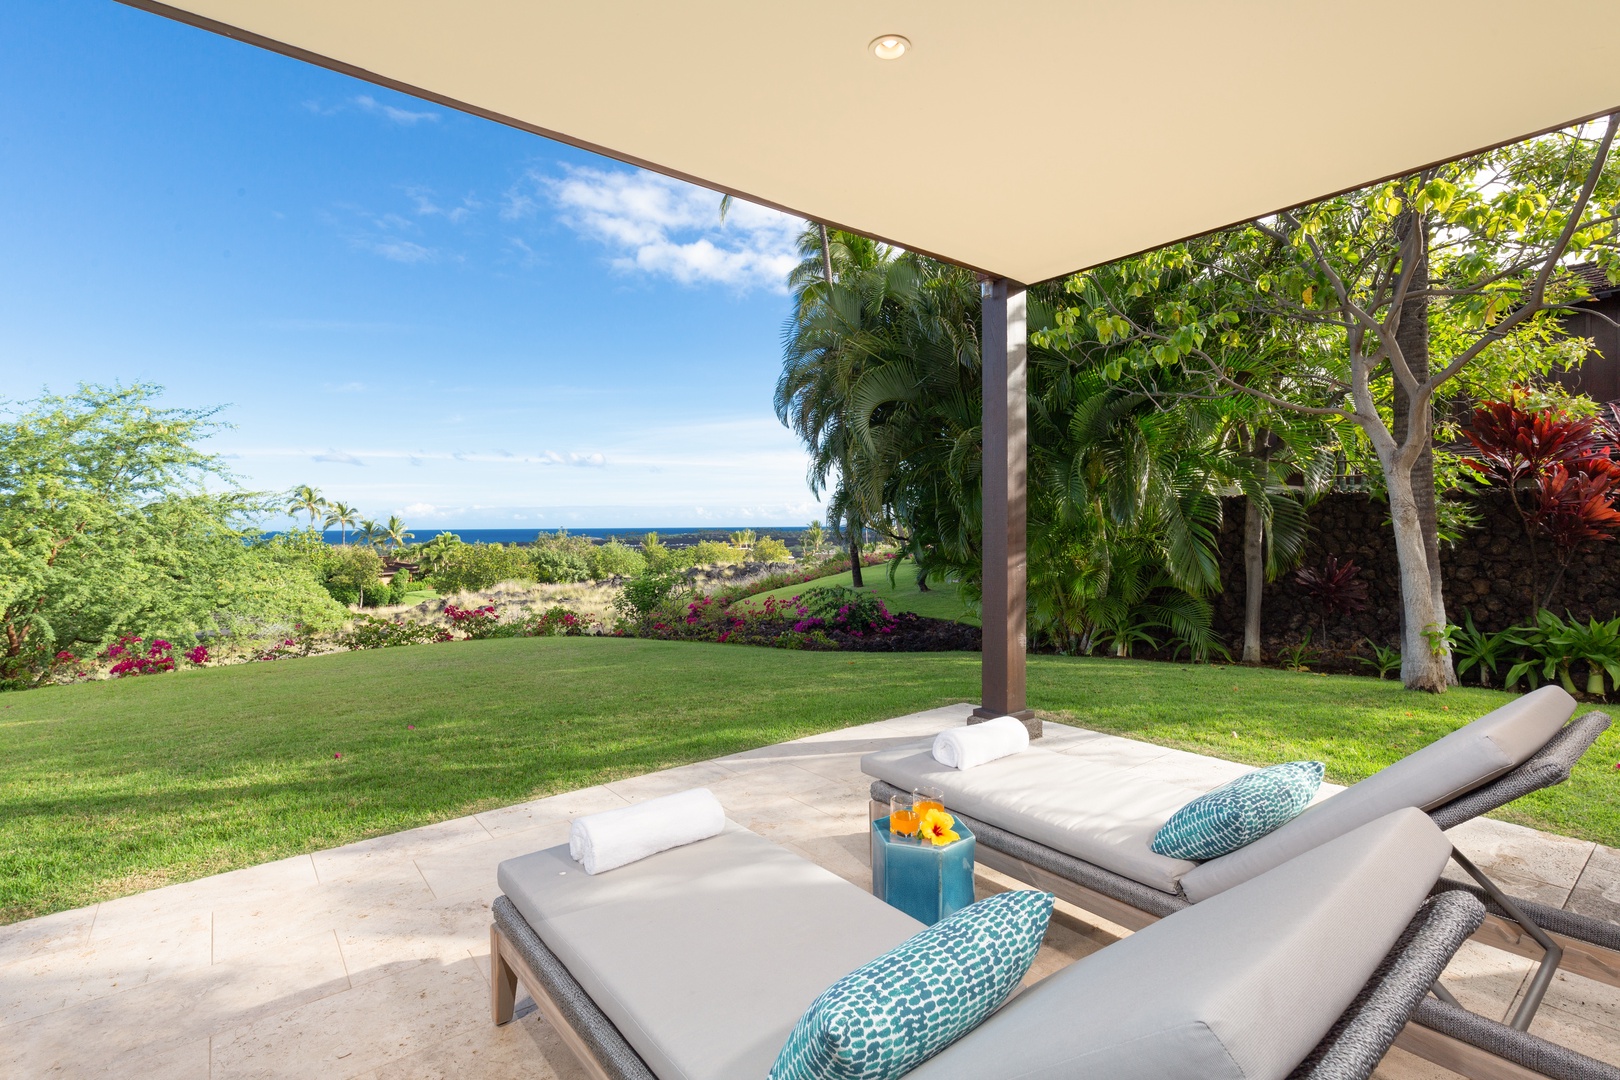 Kailua-Kona Vacation Rentals, 3BD Hali'ipua Villa (120) at Four Seasons Resort at Hualalai - Private furnished lanai perfect for relaxing in the sun